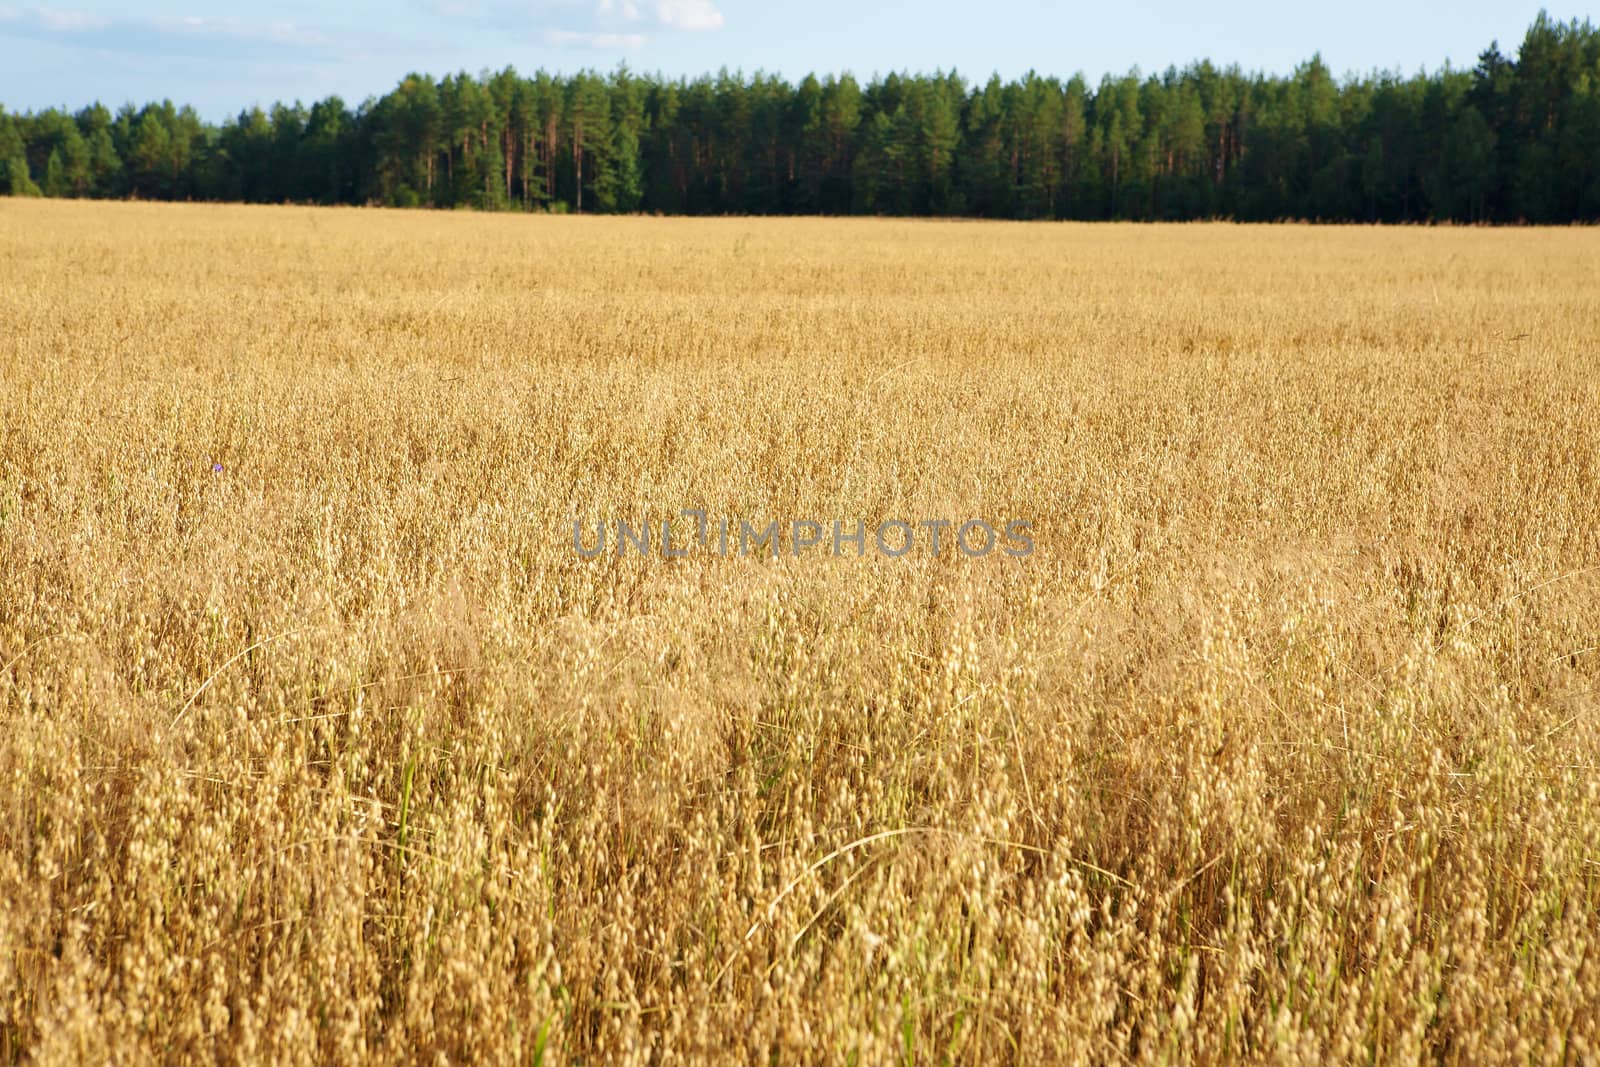 Golden oats field in the autumn season